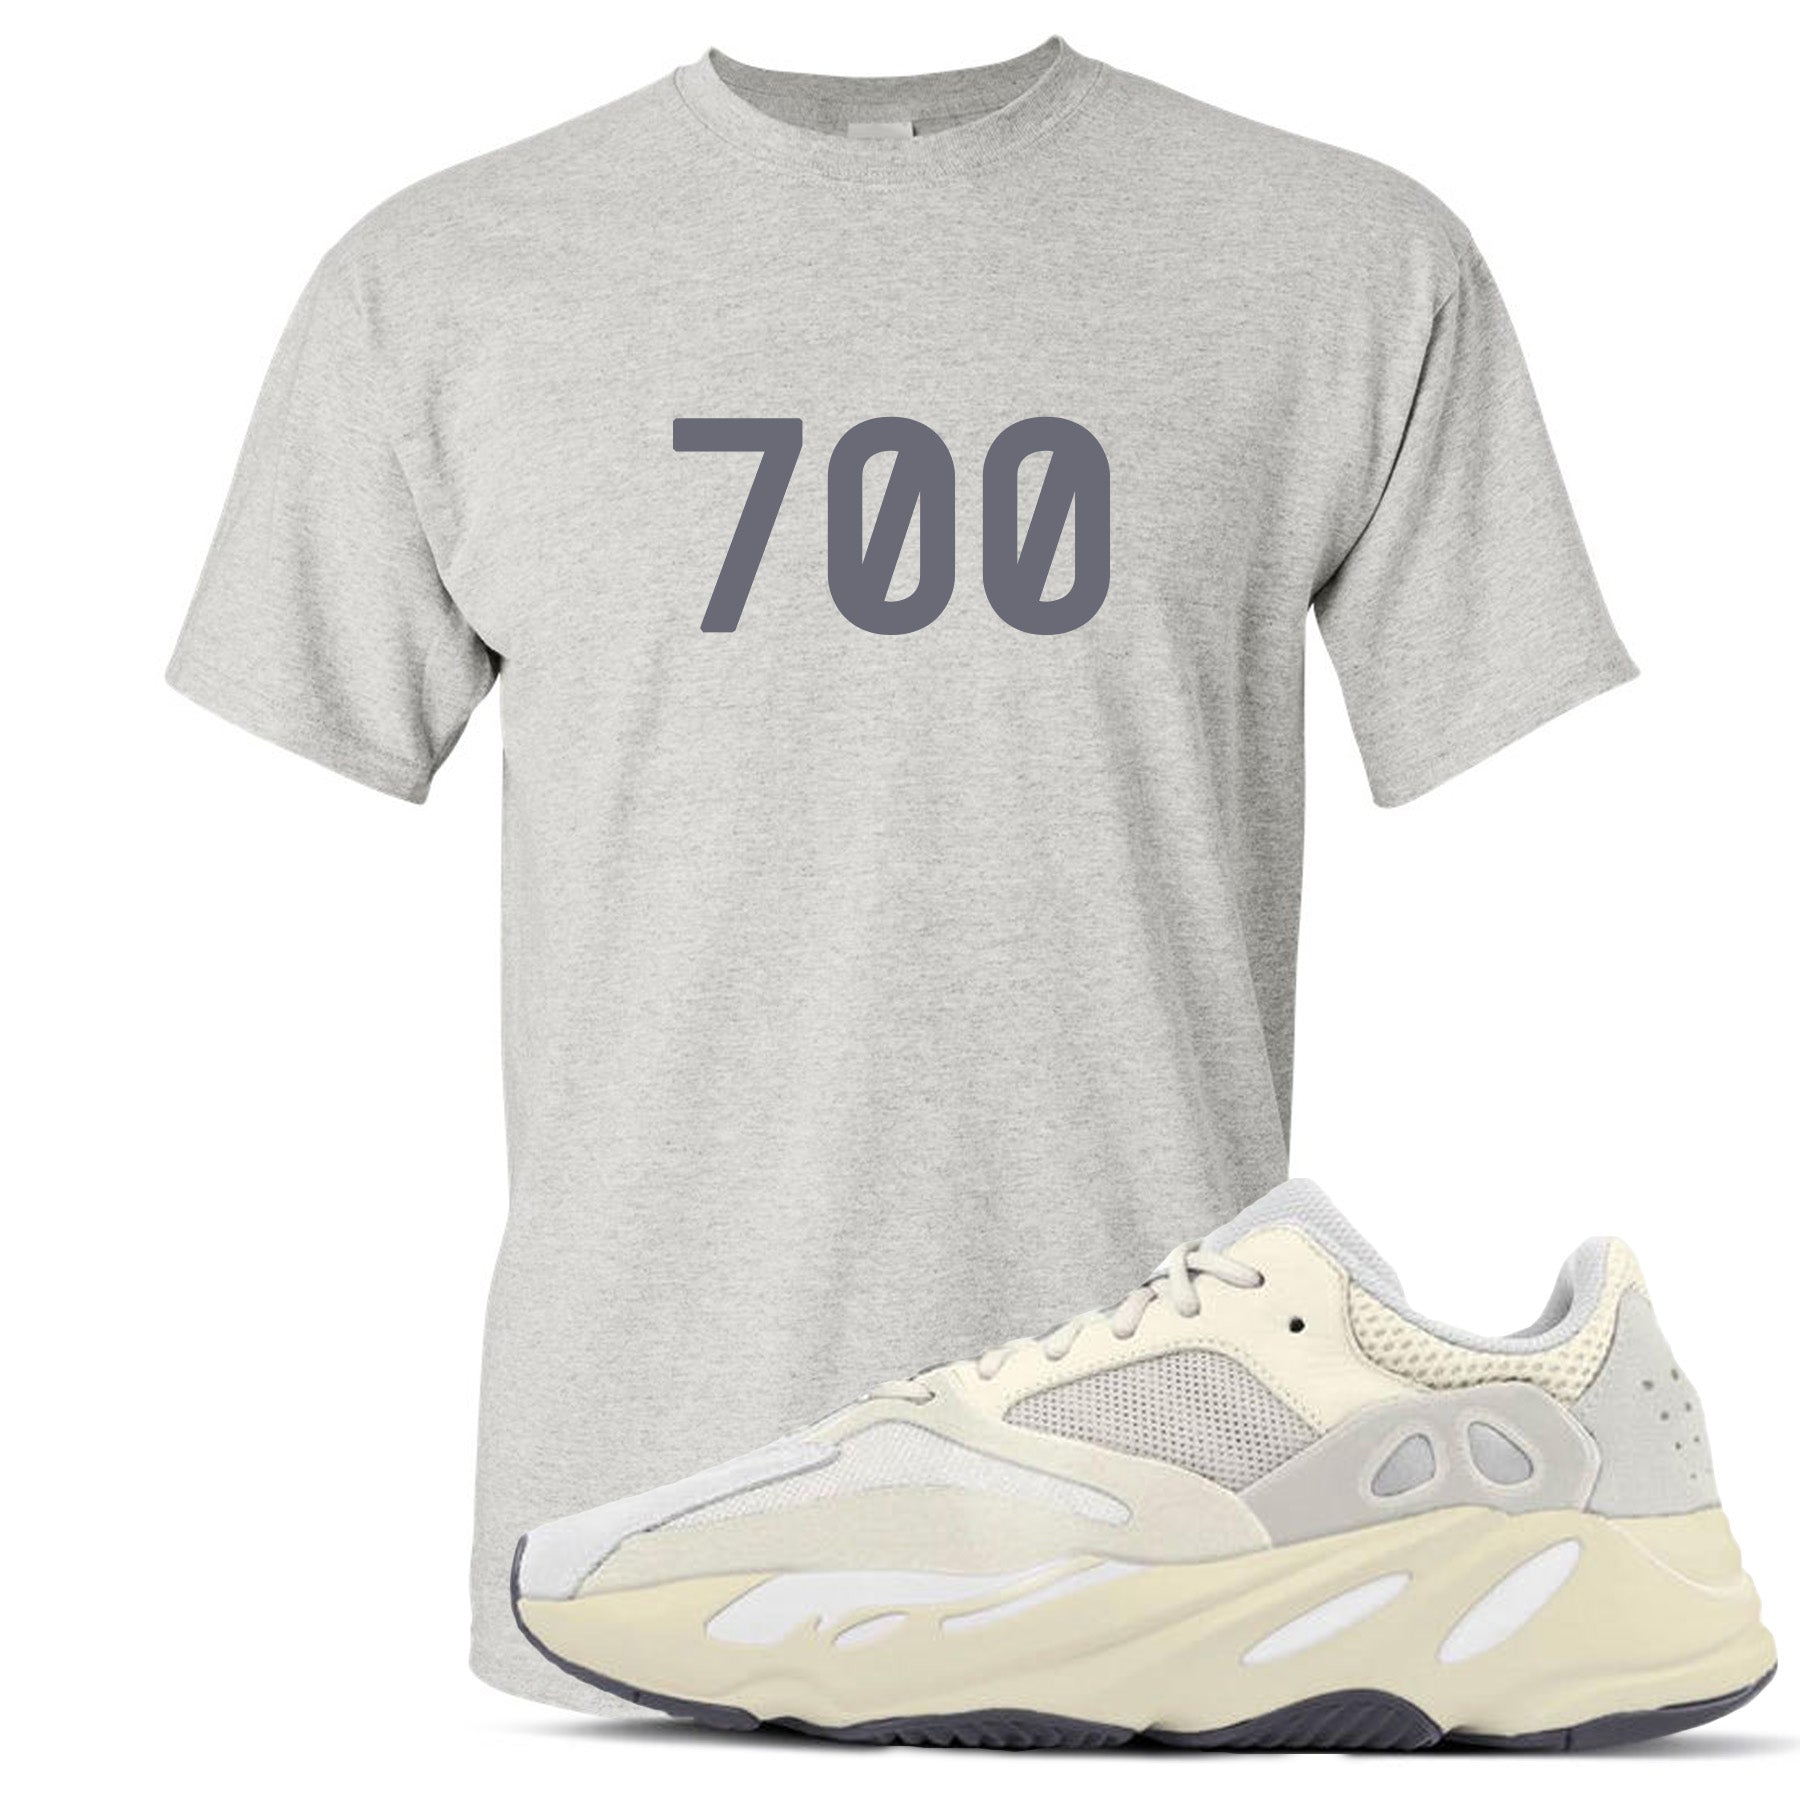 Yeezy Boost 700 Analog Sneaker Hook Up 